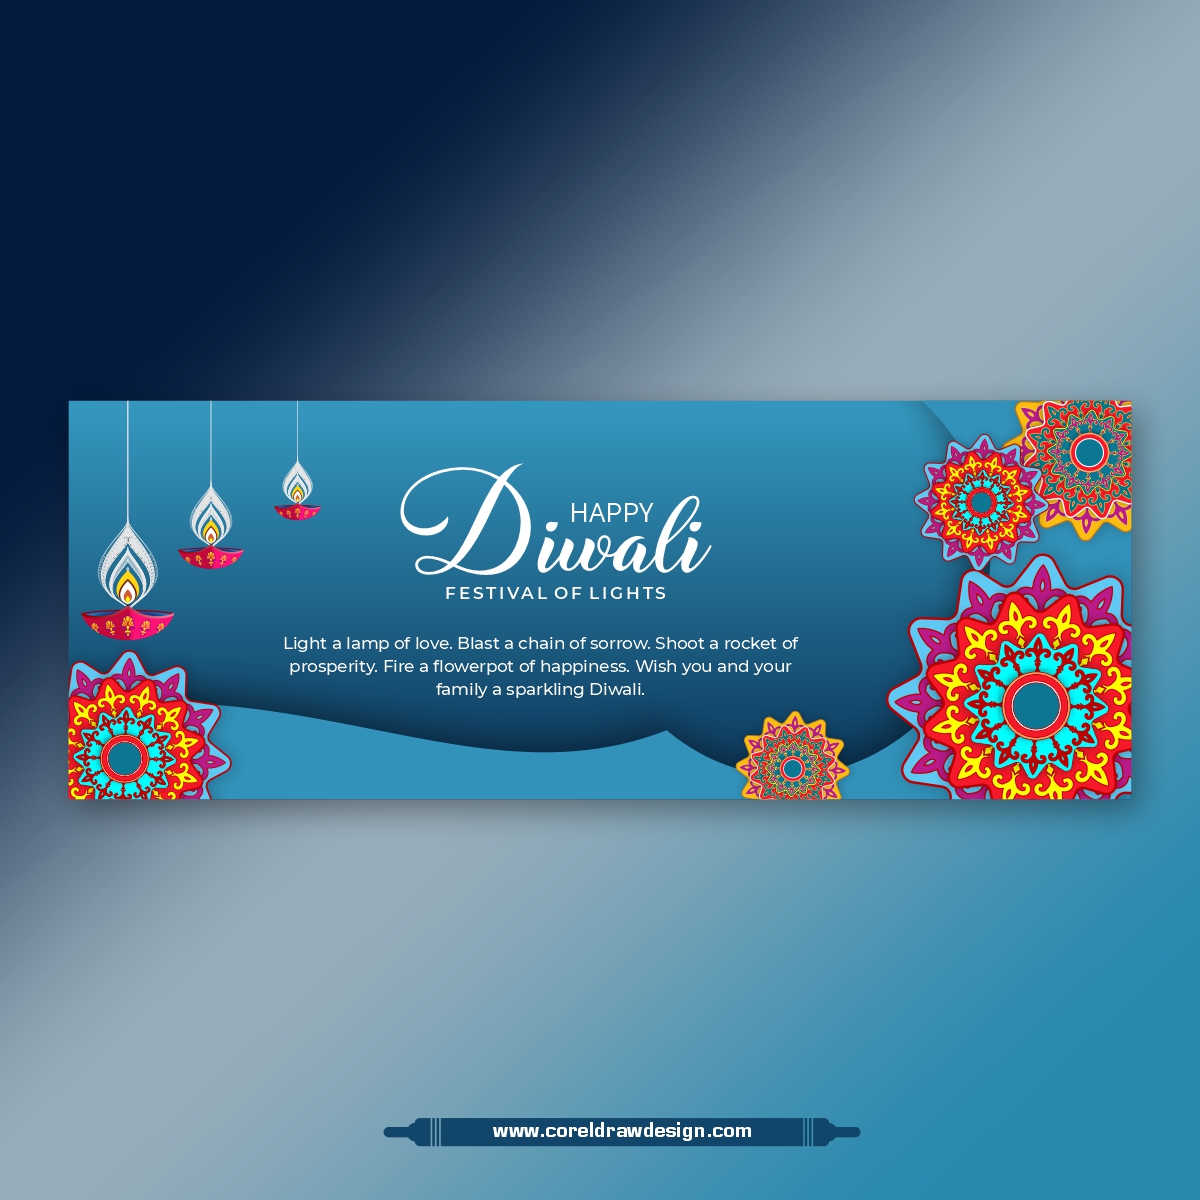 Happy Diwali Festival Banner Design Free Vector